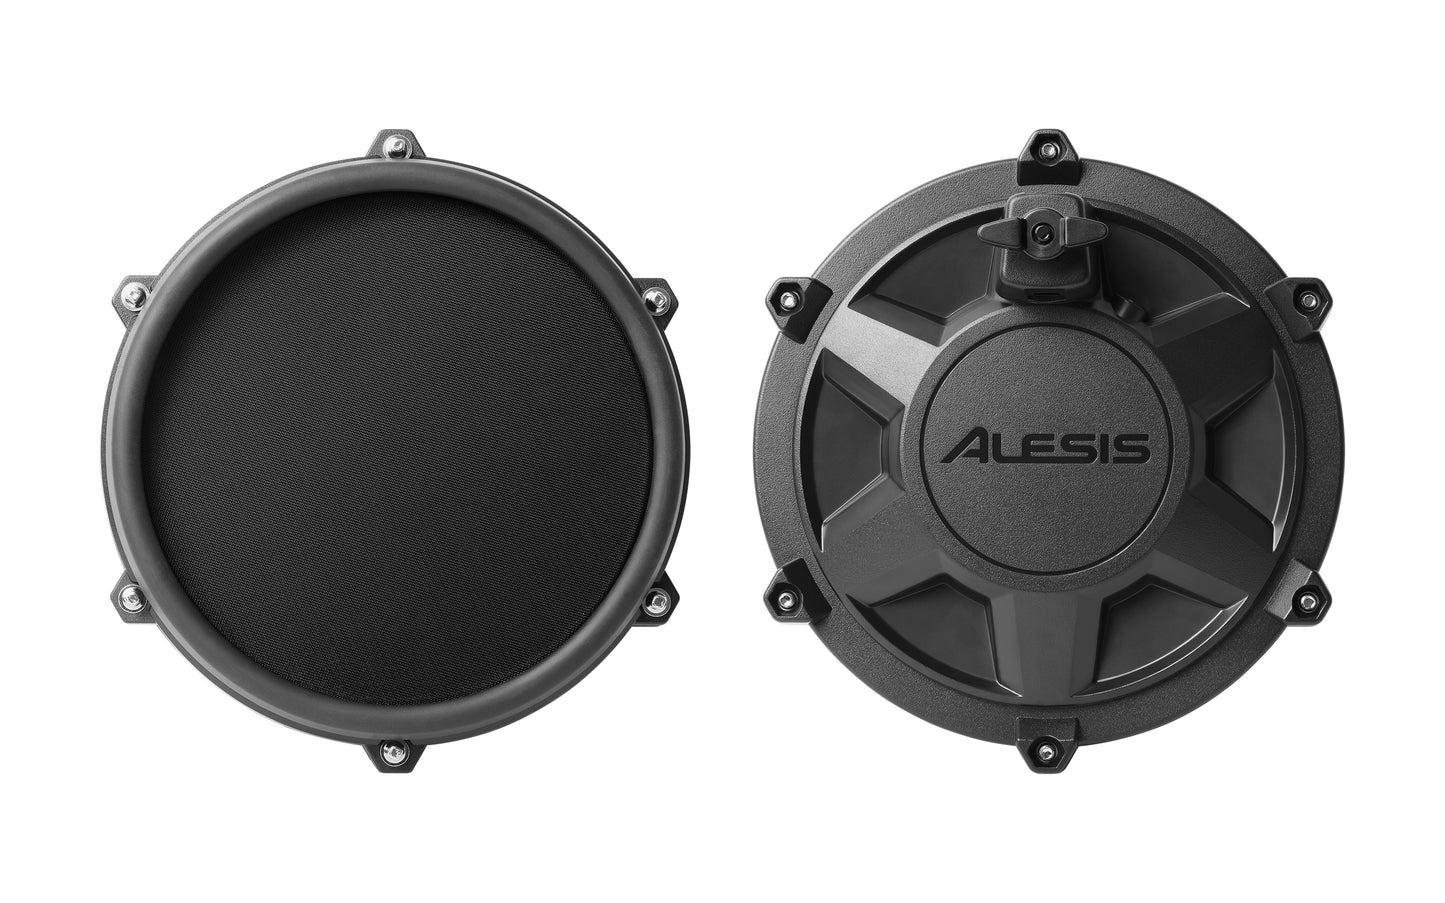 Alesis Turbo Mesh Electric Drum Kit